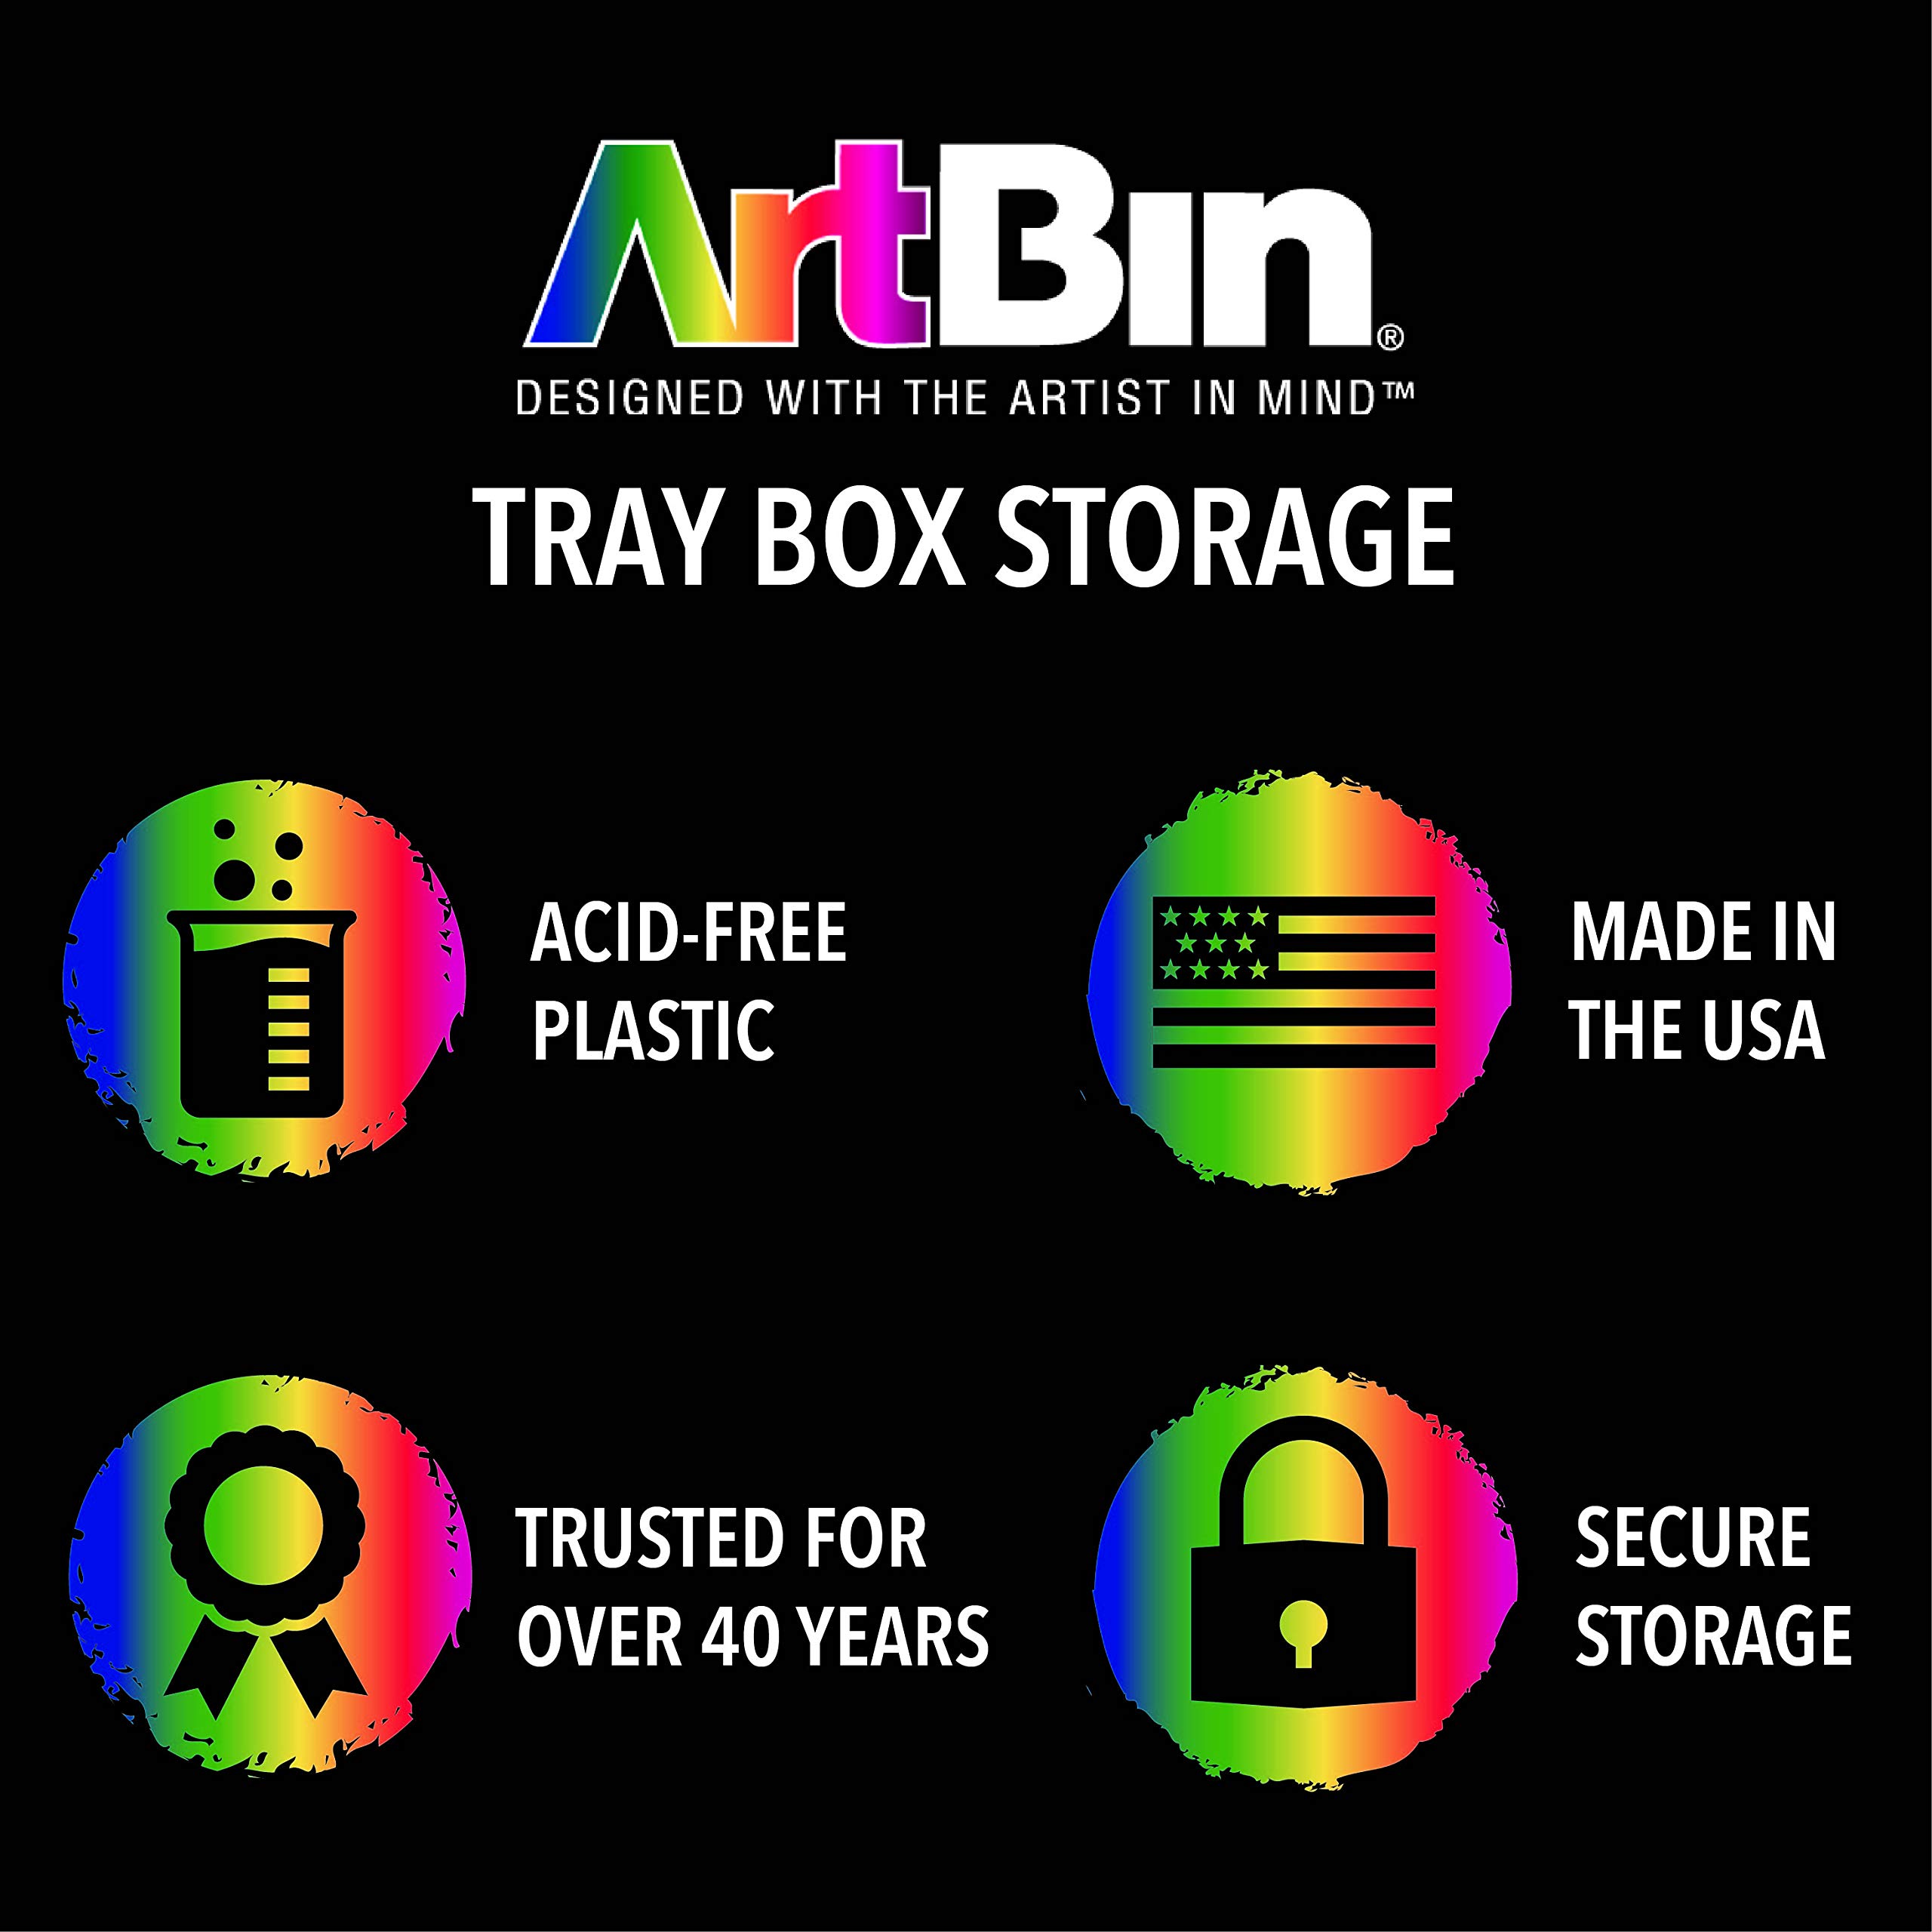 ArtBin 6918AH Twin Top 17 inch Supply Box, Portable Art & Craft Supply Organizer with Handle, [1] Plastic Storage Case, Translucent